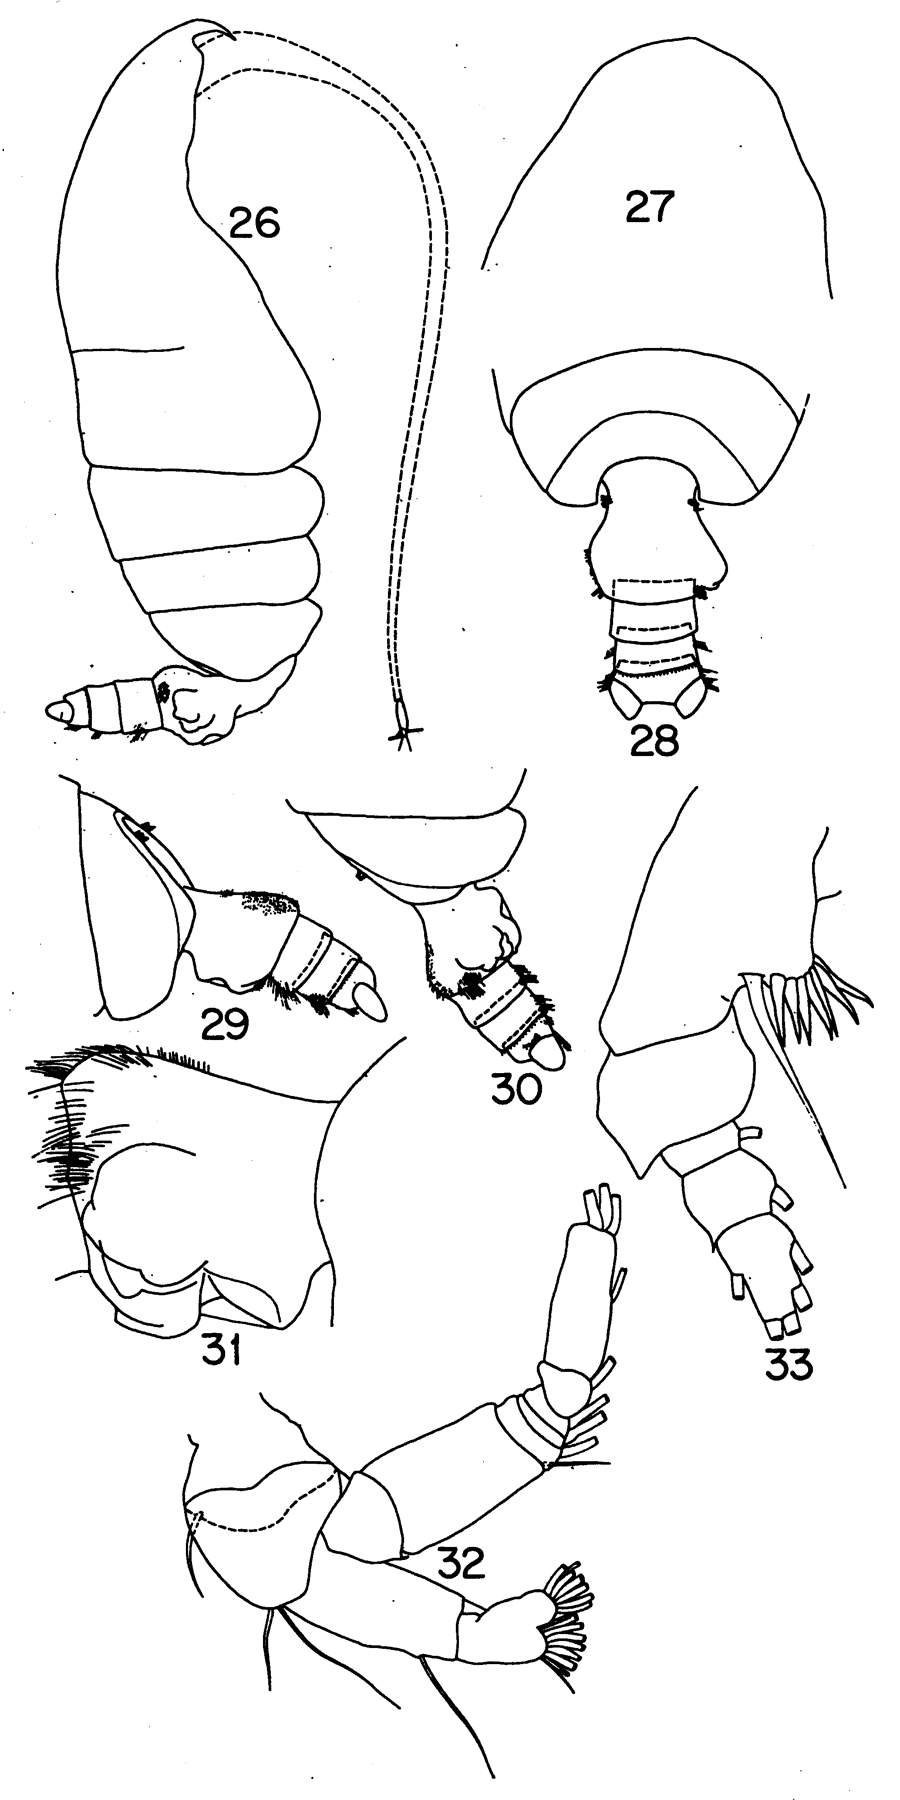 Species Pseudochirella mawsoni - Plate 15 of morphological figures